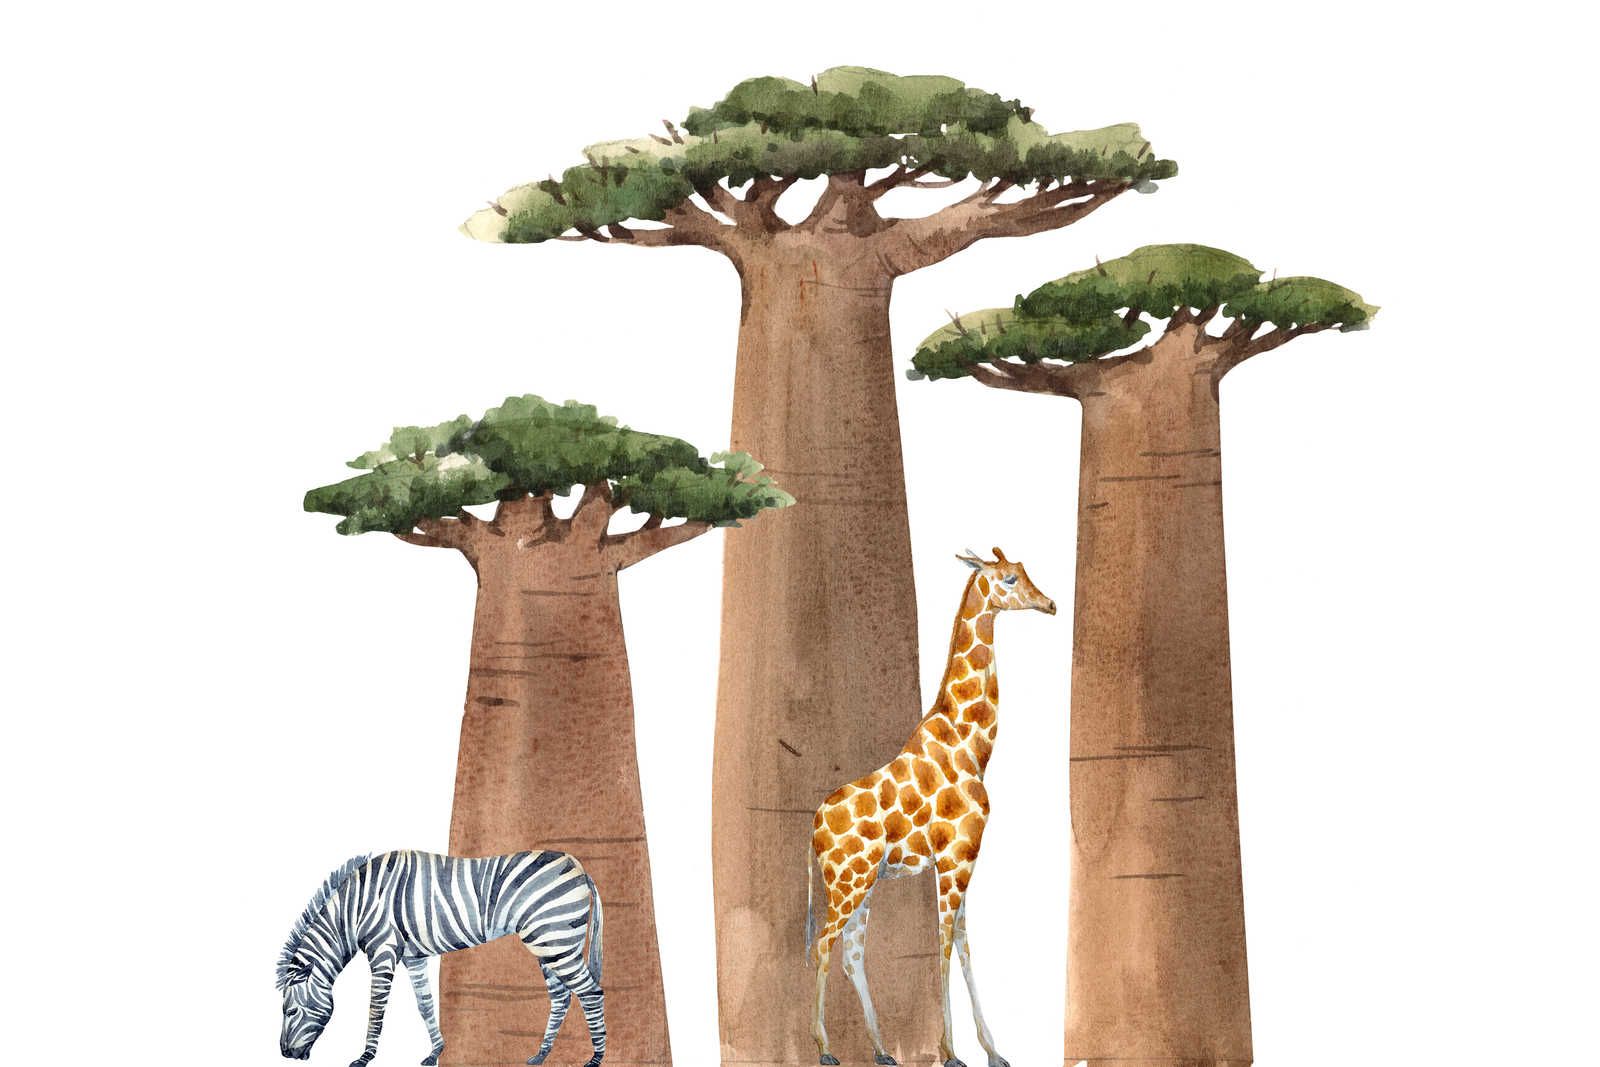             Toile Savane avec girafe et zèbre - 120 cm x 80 cm
        